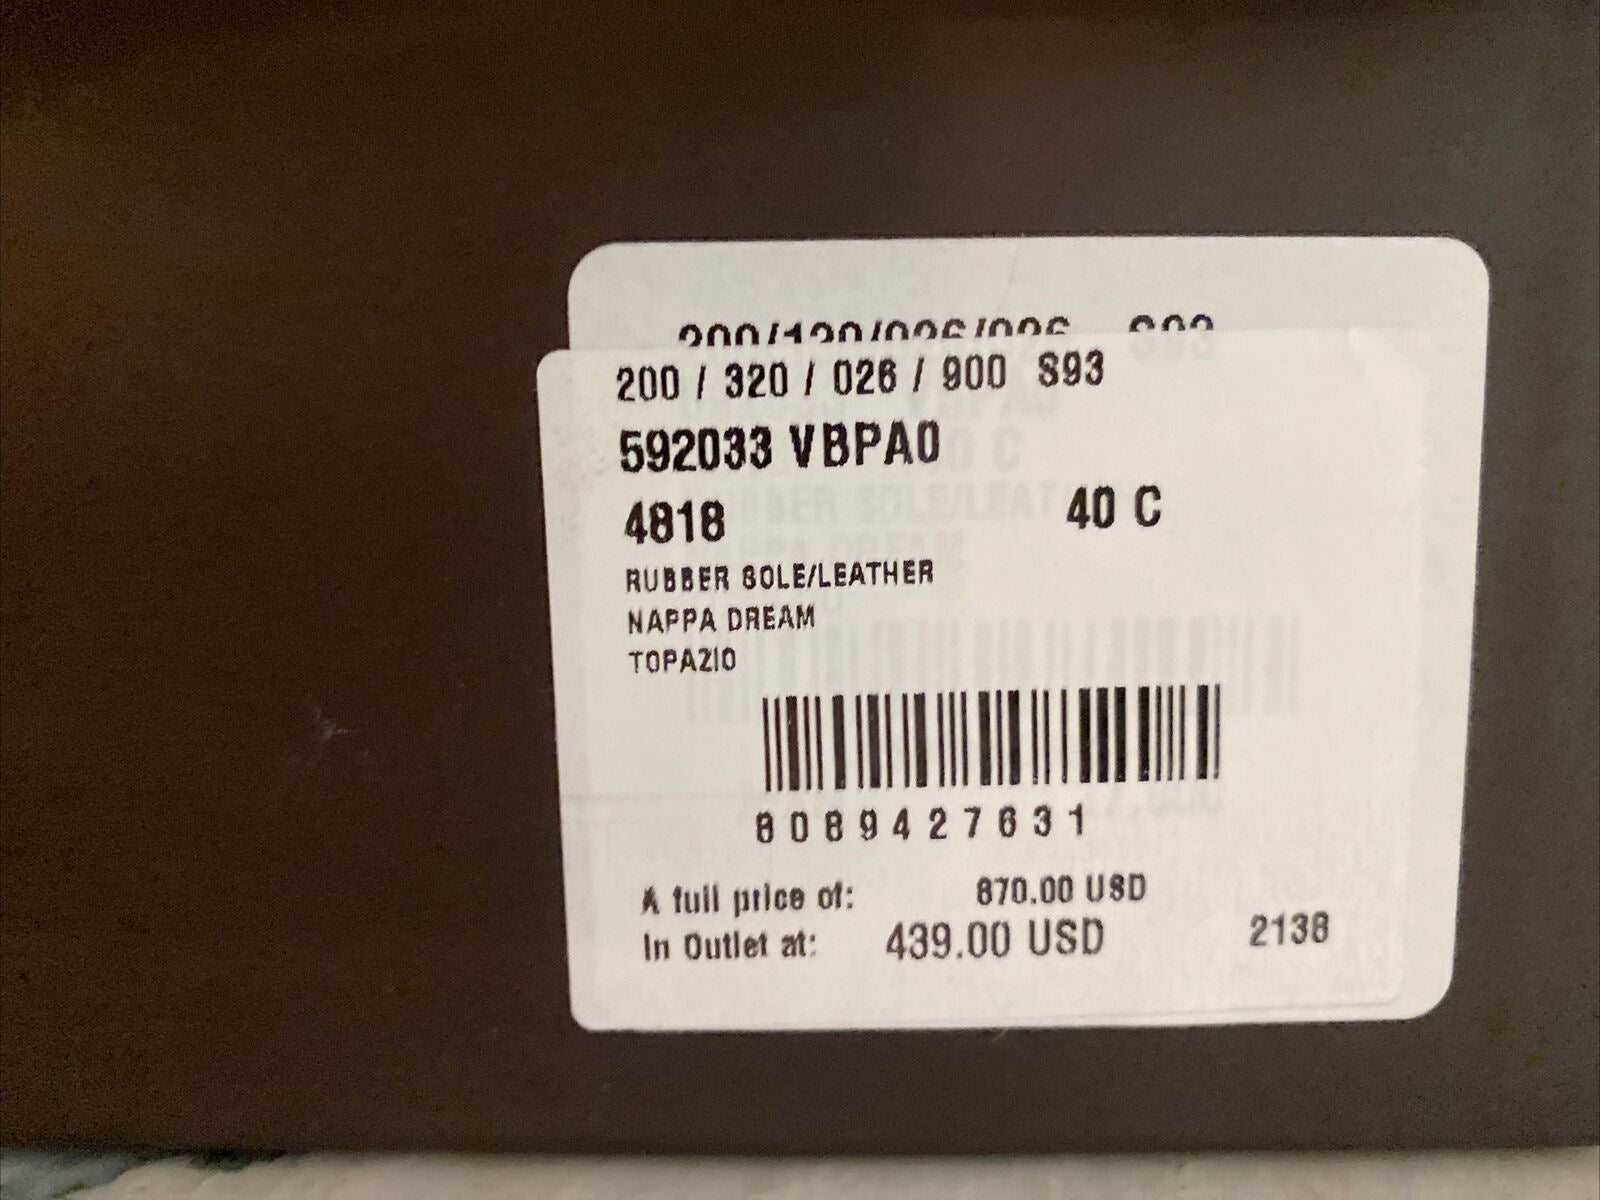 NIB $ 870 Bottega Veneta Leder Napa Dream High Vamp Topaz Schuhe 10 US 592033